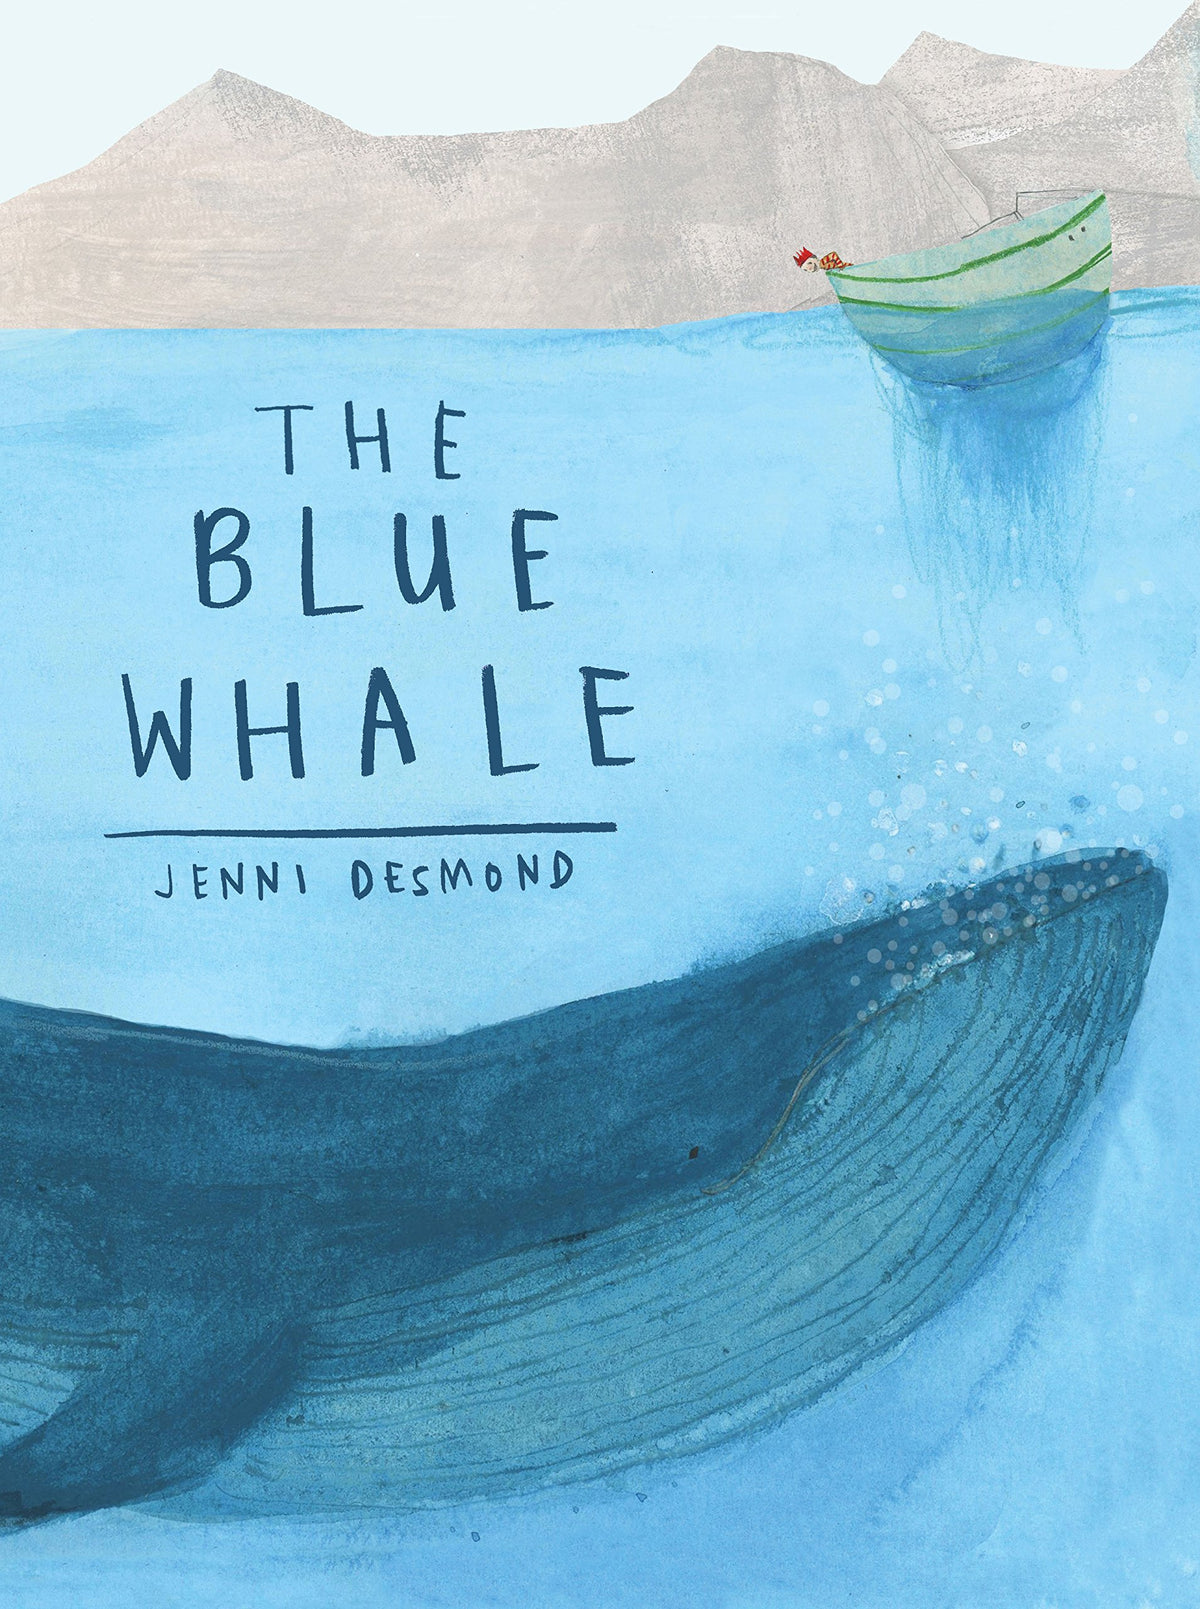 The Blue Whale by Jenni Desmond